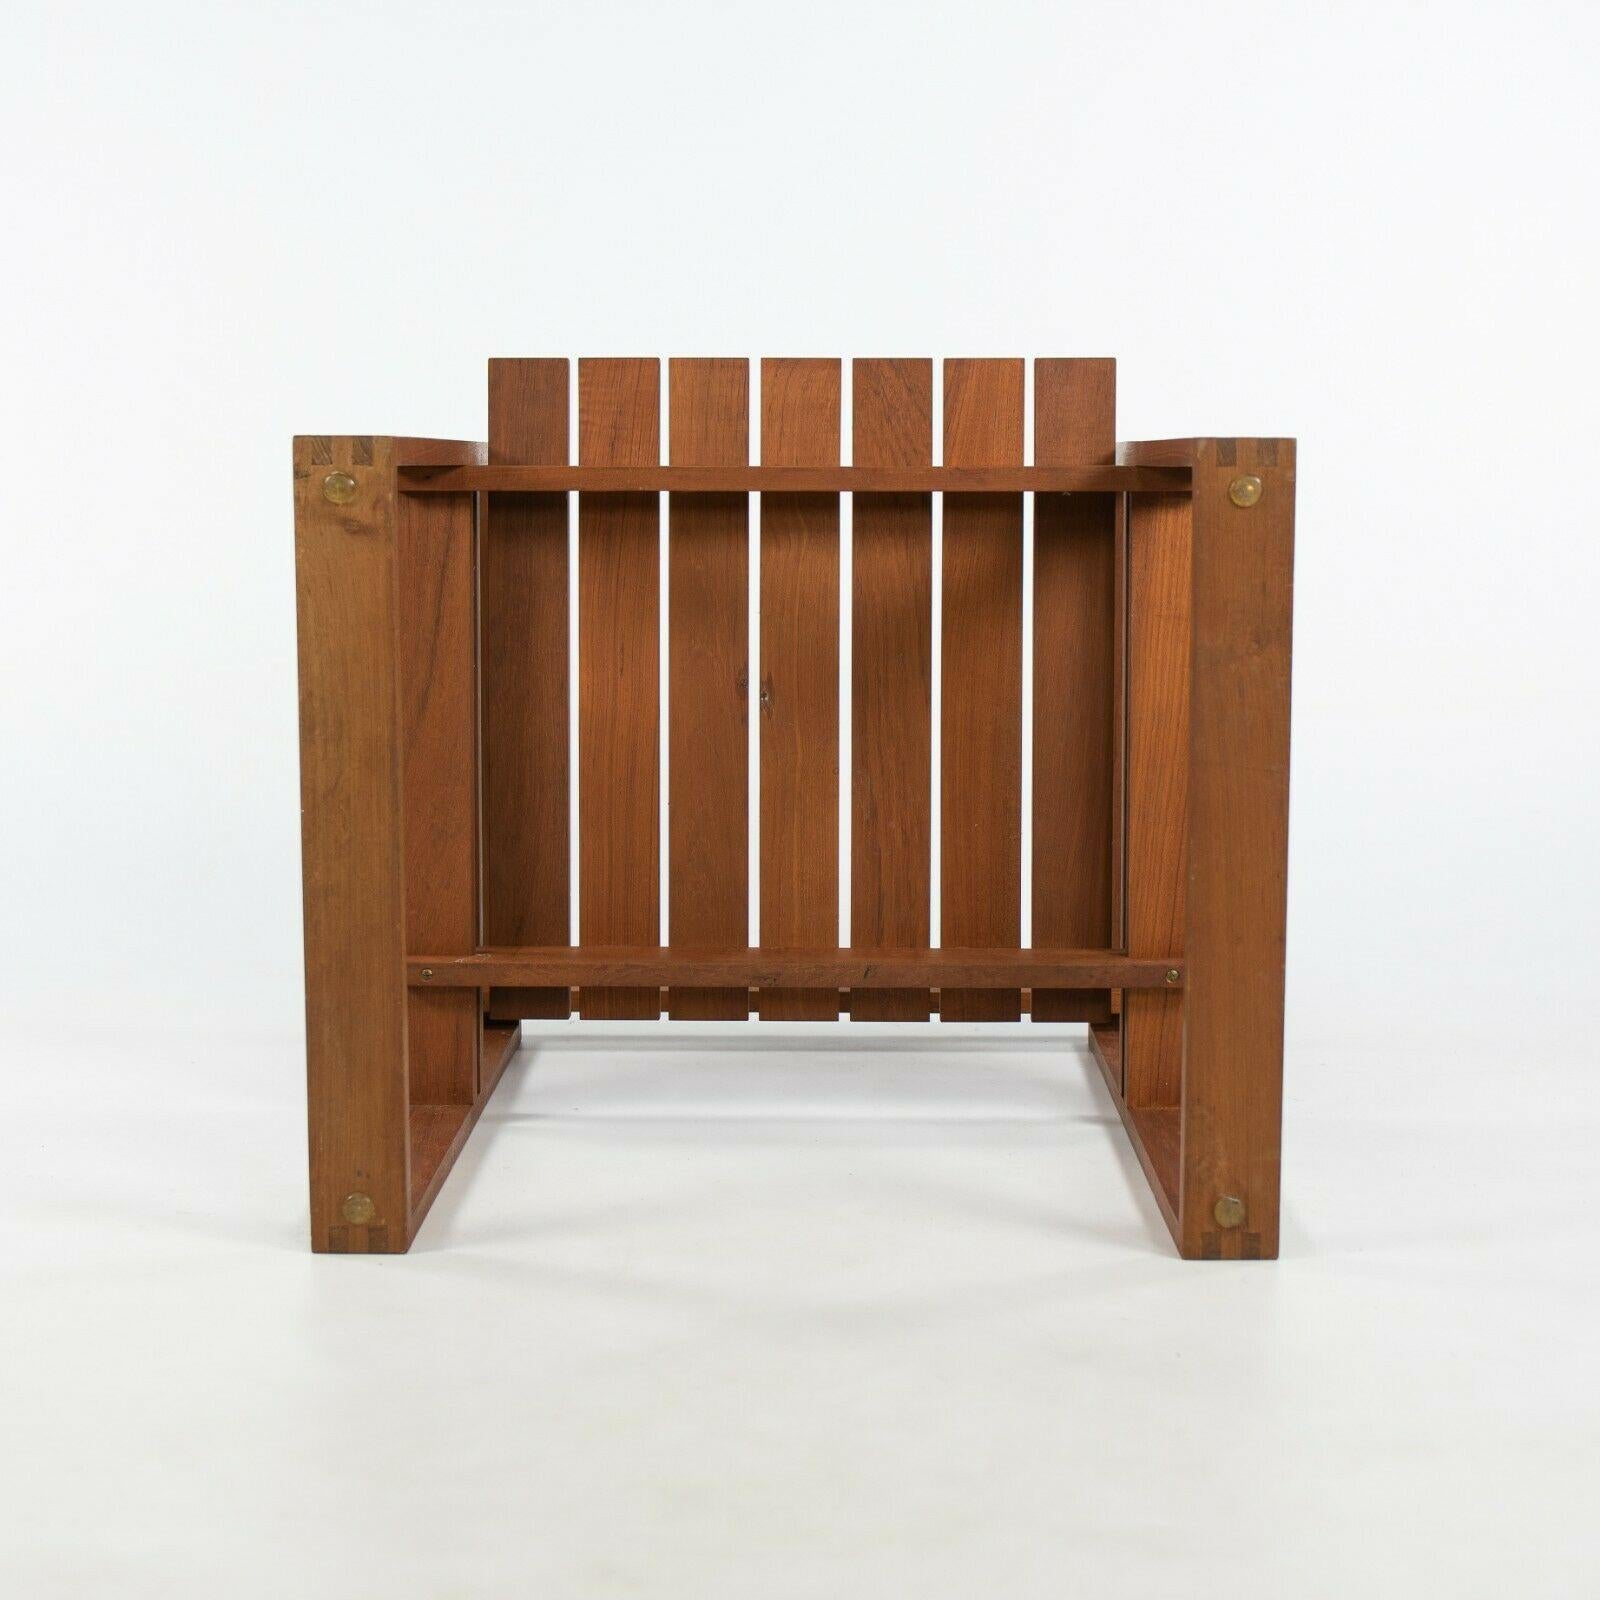 1975 Bodil Kjaer for CI Designs Rare Teak Slat Seat Arm Chair For Sale 1